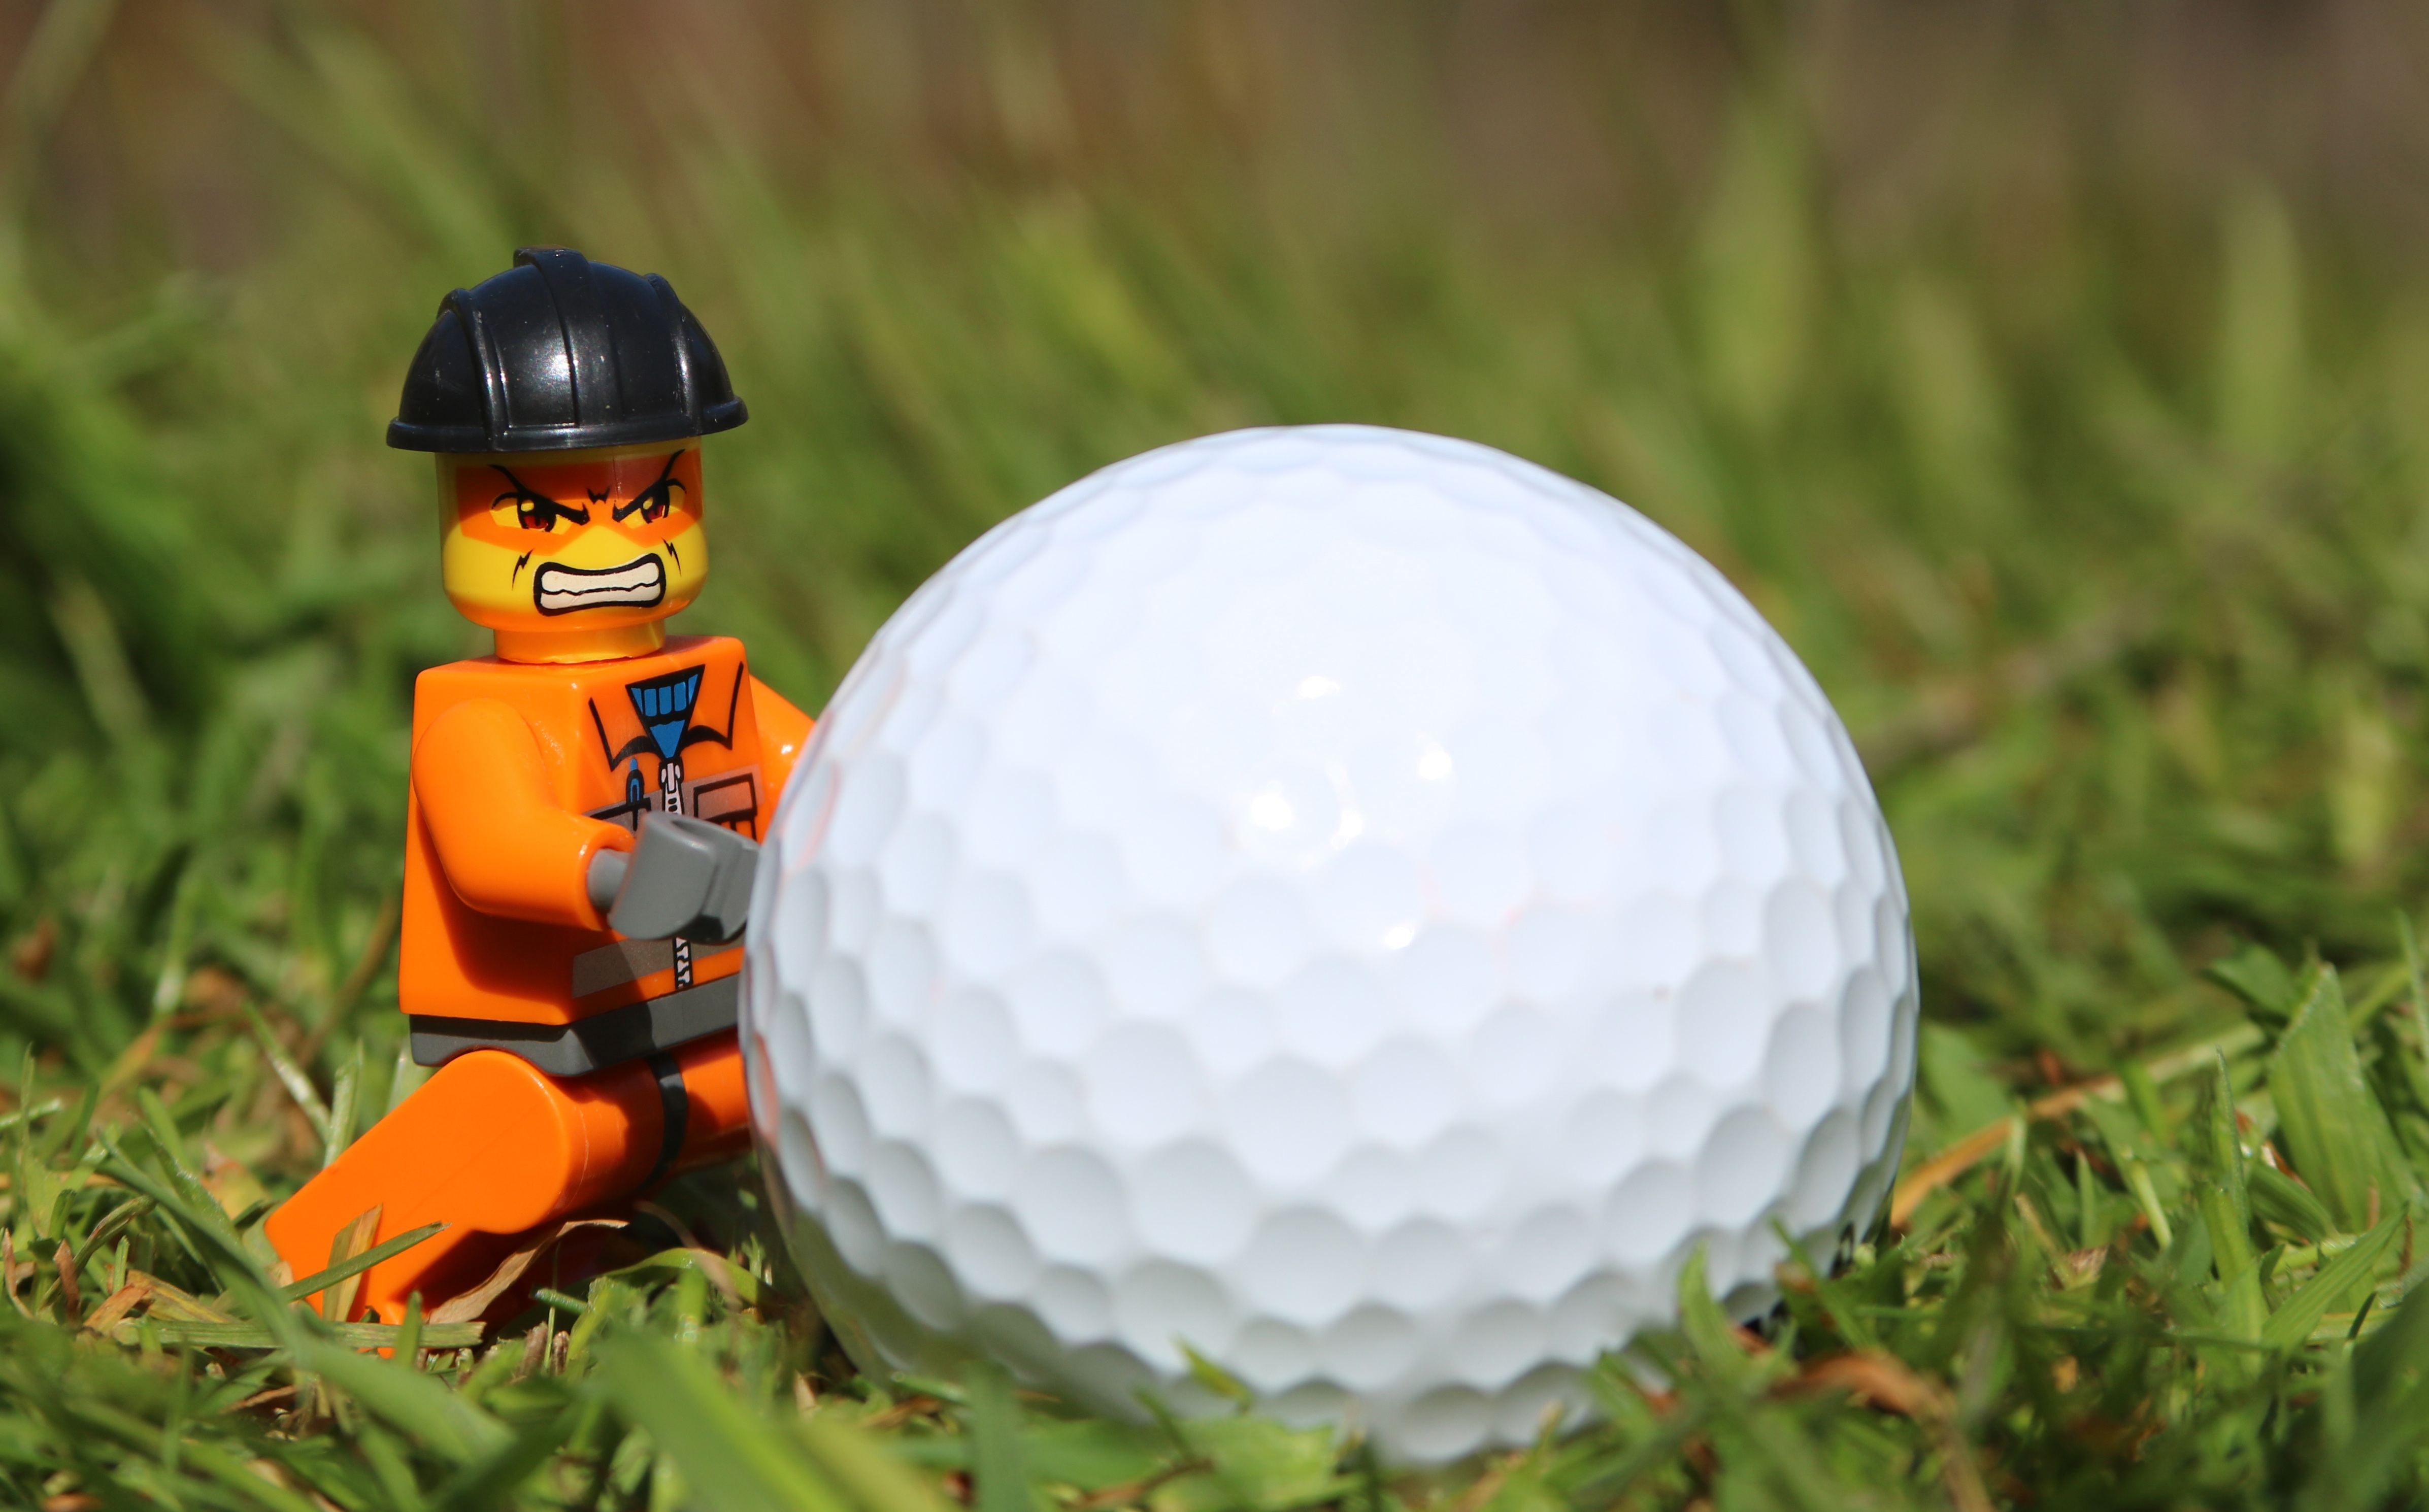 Figurine Golf Ball Grass Lego Toy 4785x2979